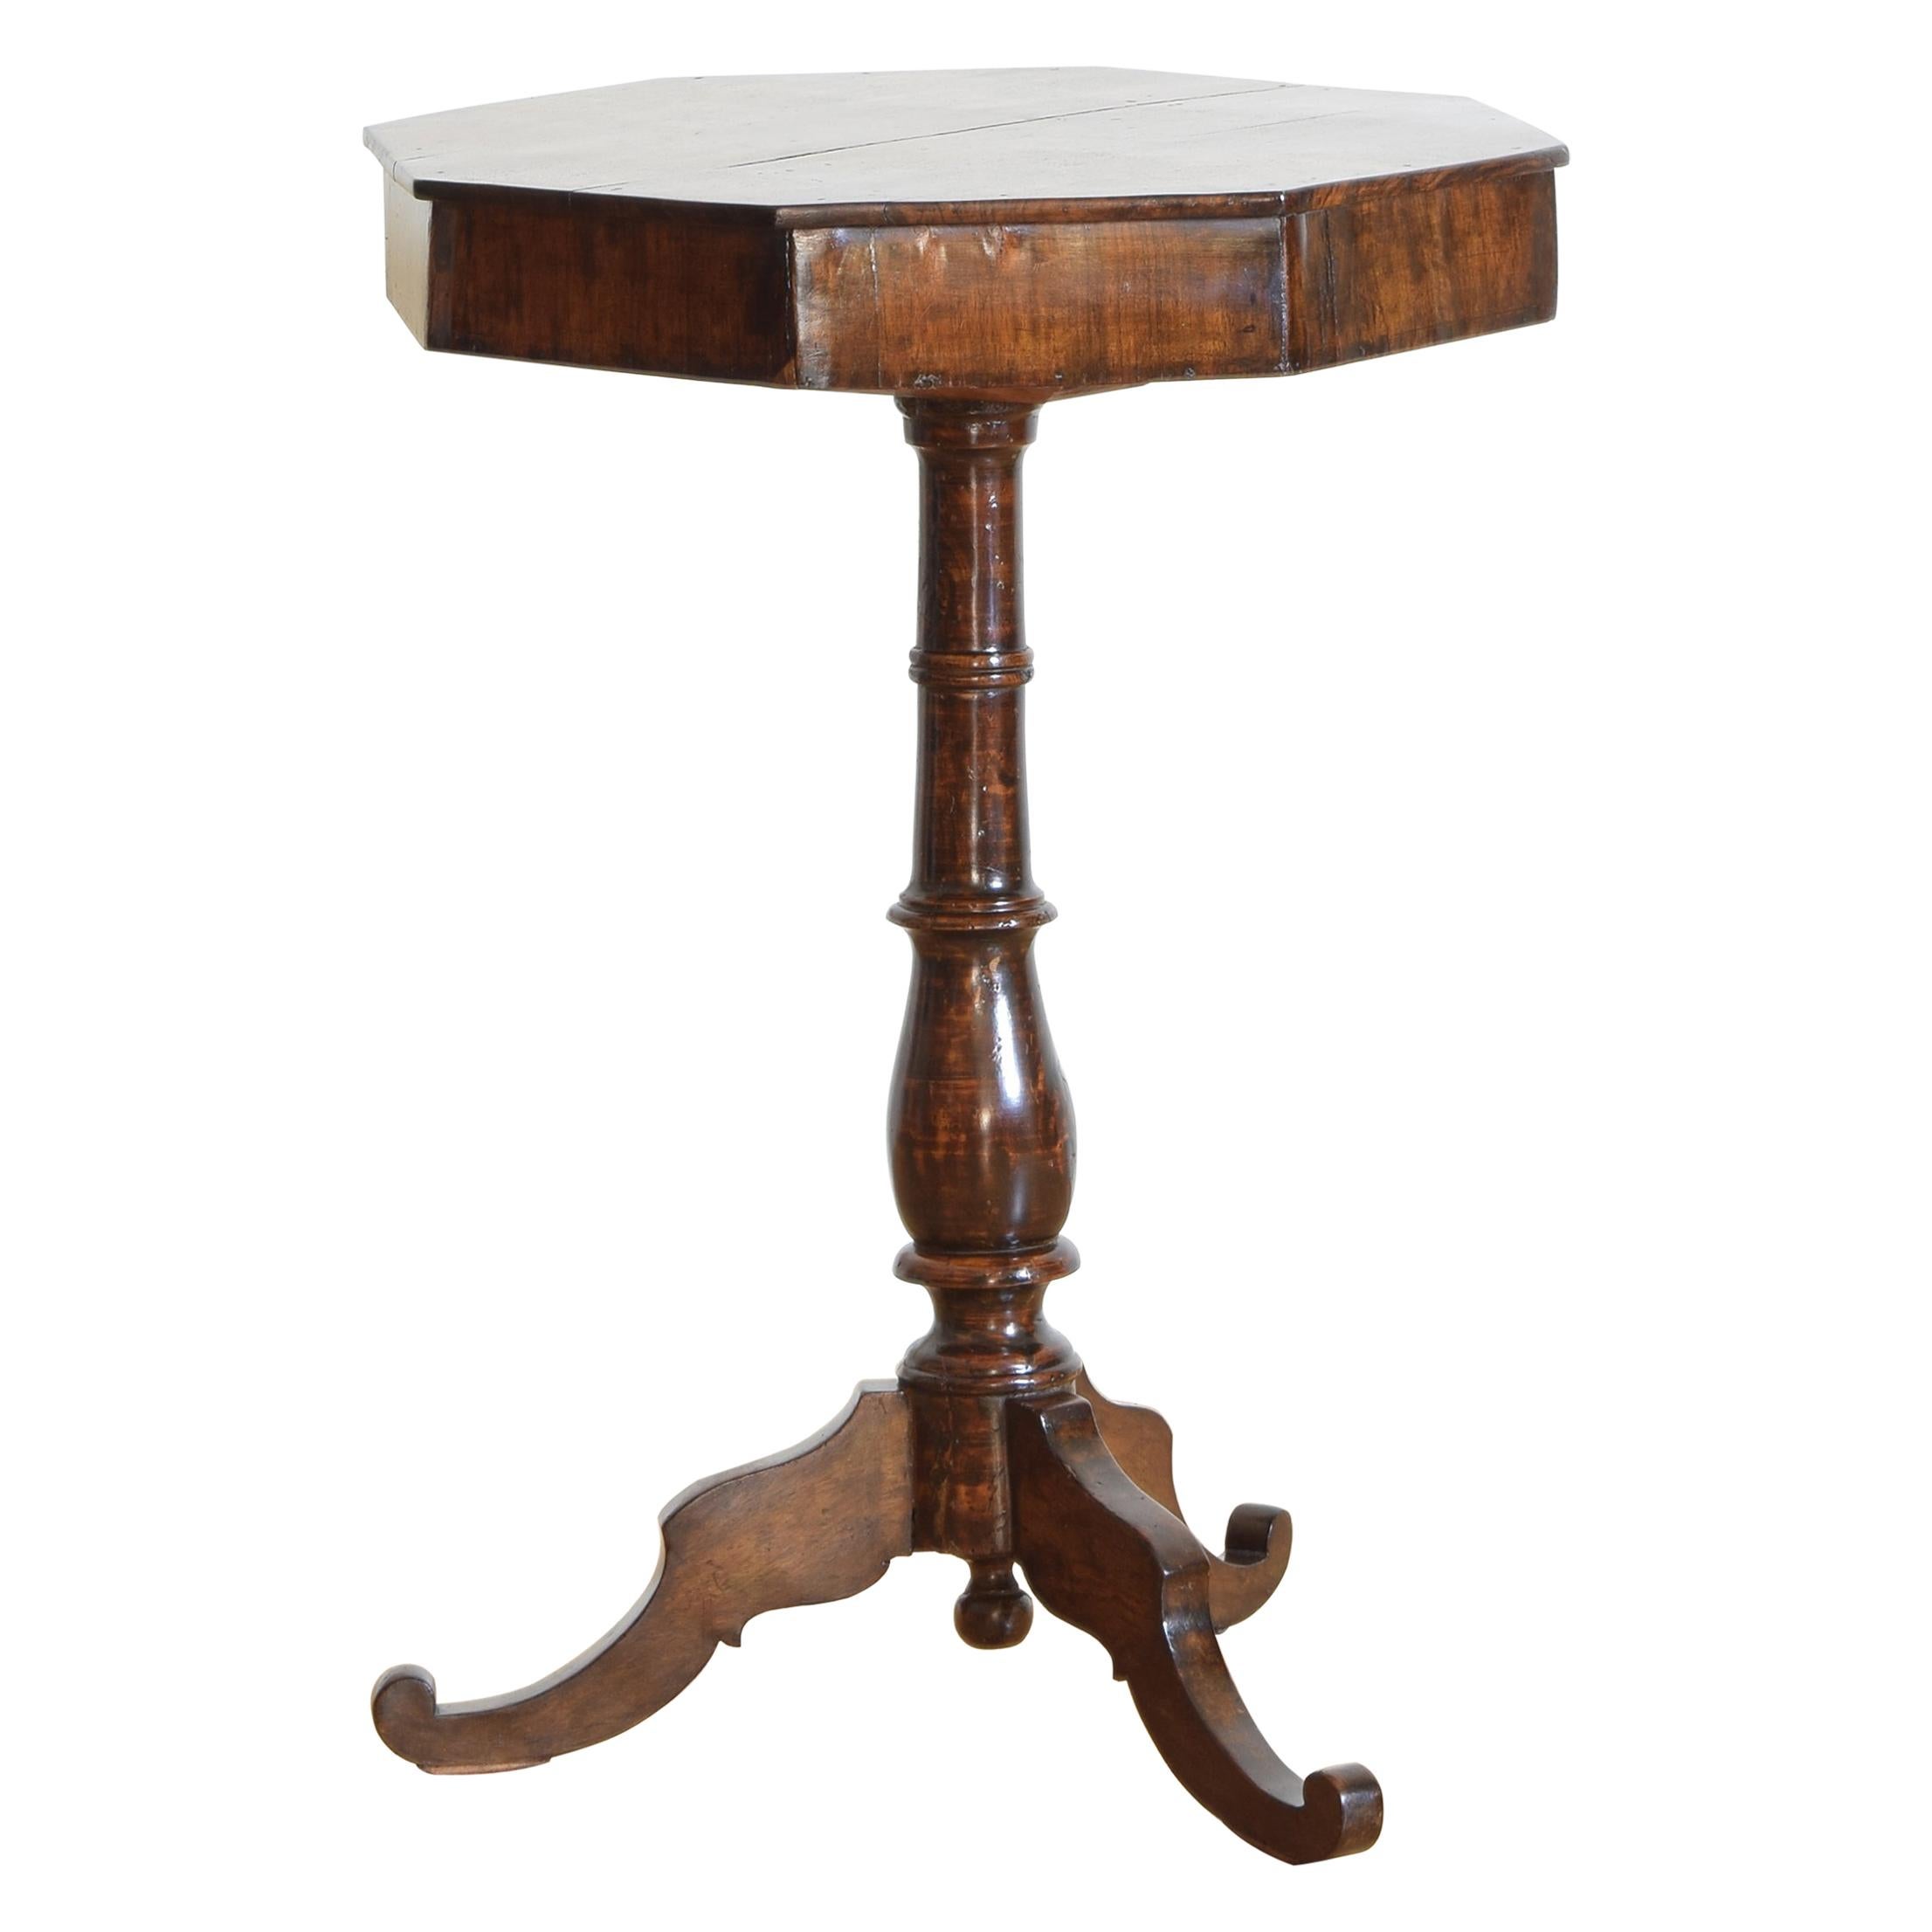 Italian Neoclassic Walnut Octagonal 1-Drawer Center Table, circa 1825